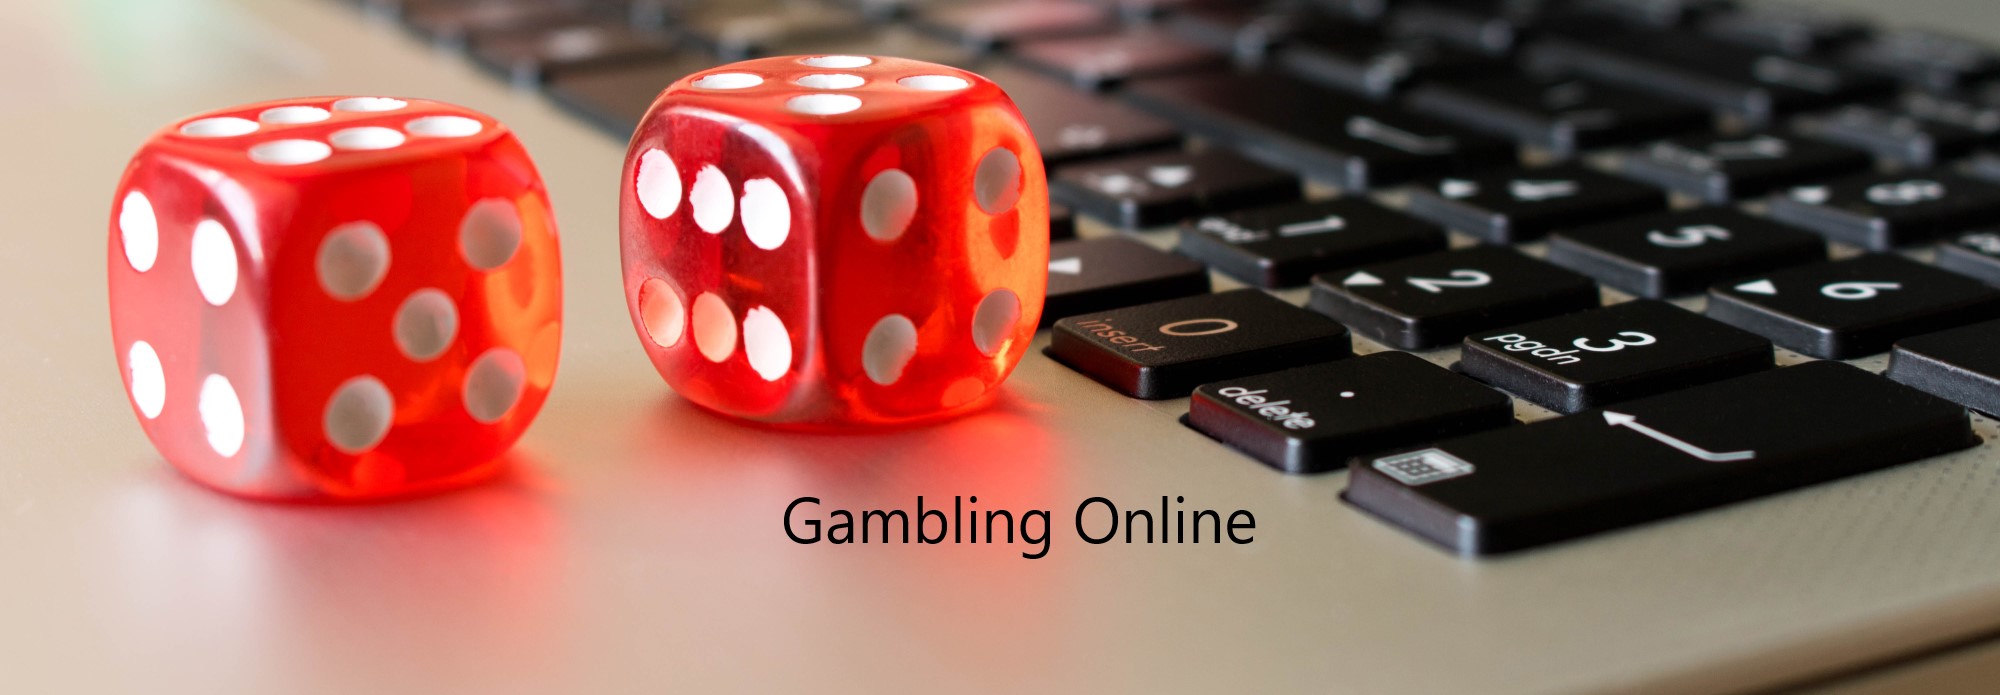 Gambling Online - CasinoGrades